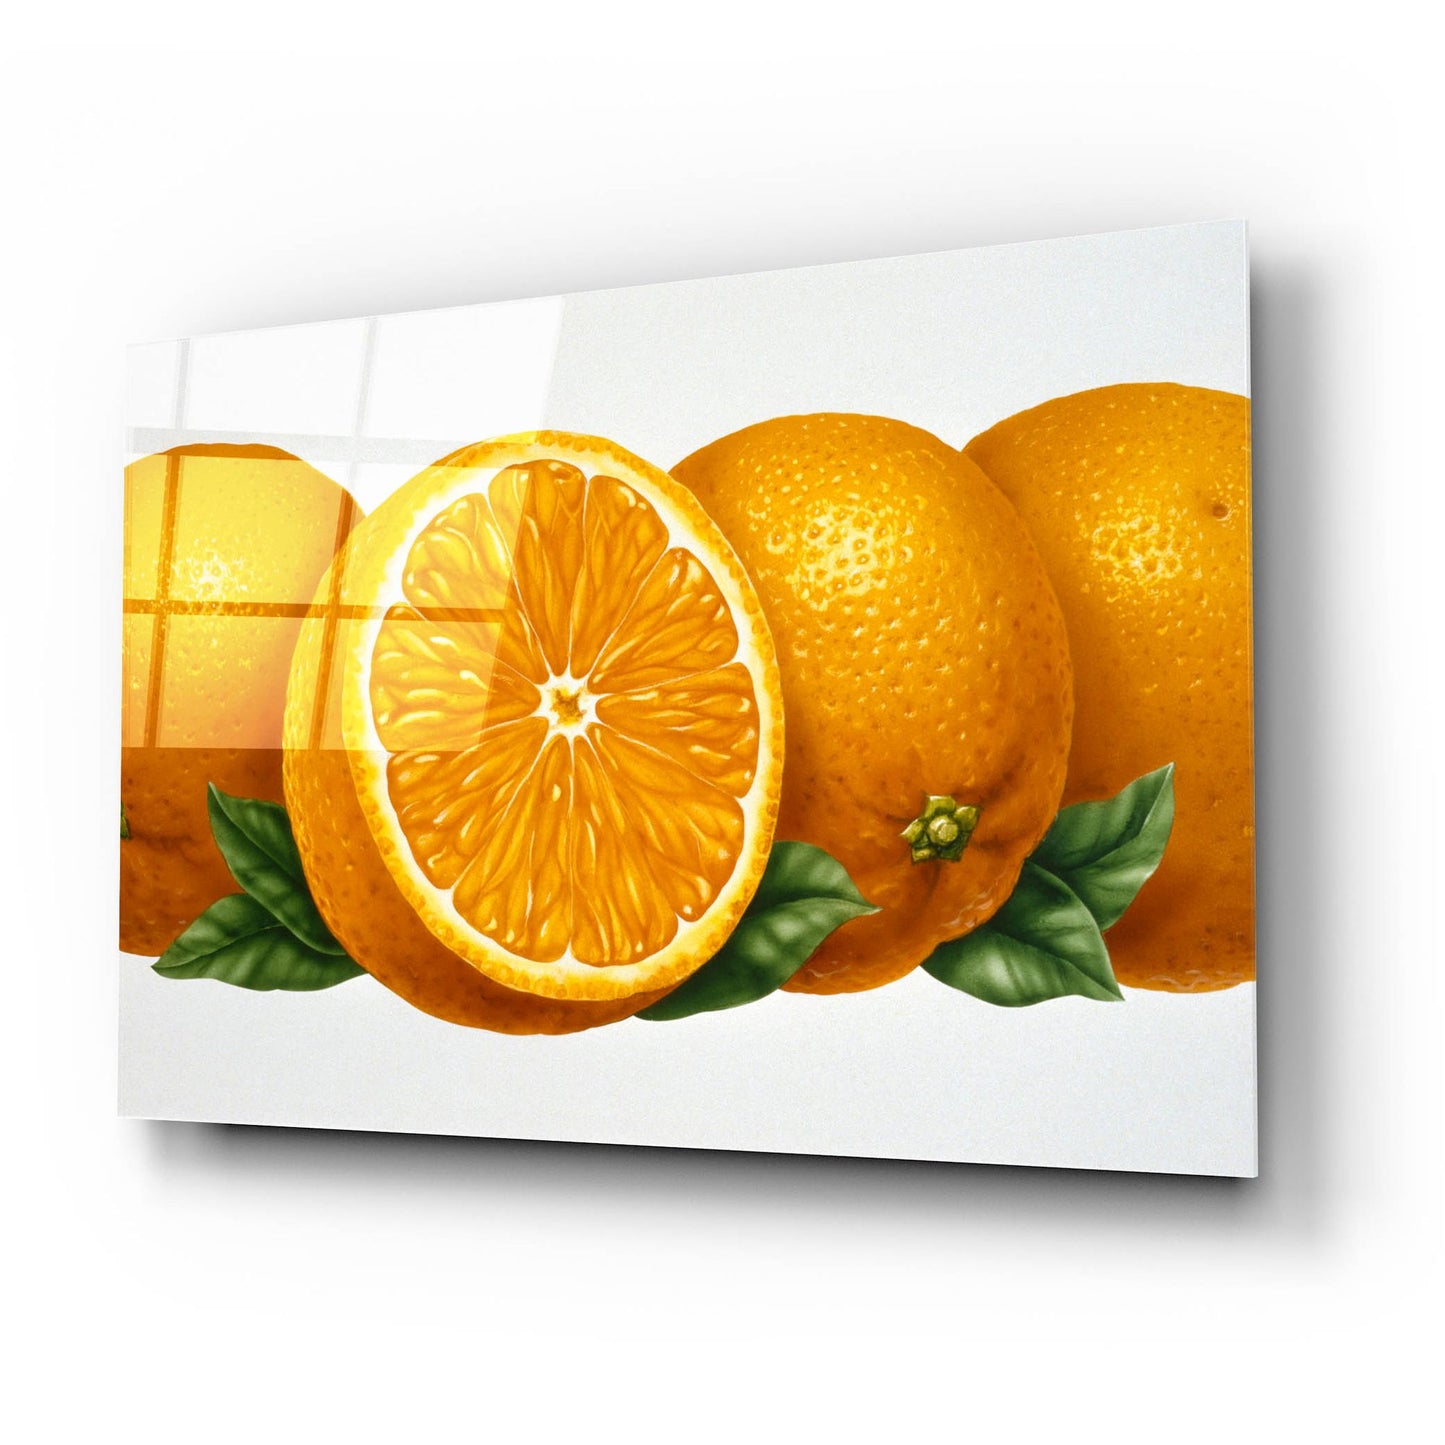 Epic Art 'Oranges' by Harro Maass, Acrylic Glass Wall Art,24x16